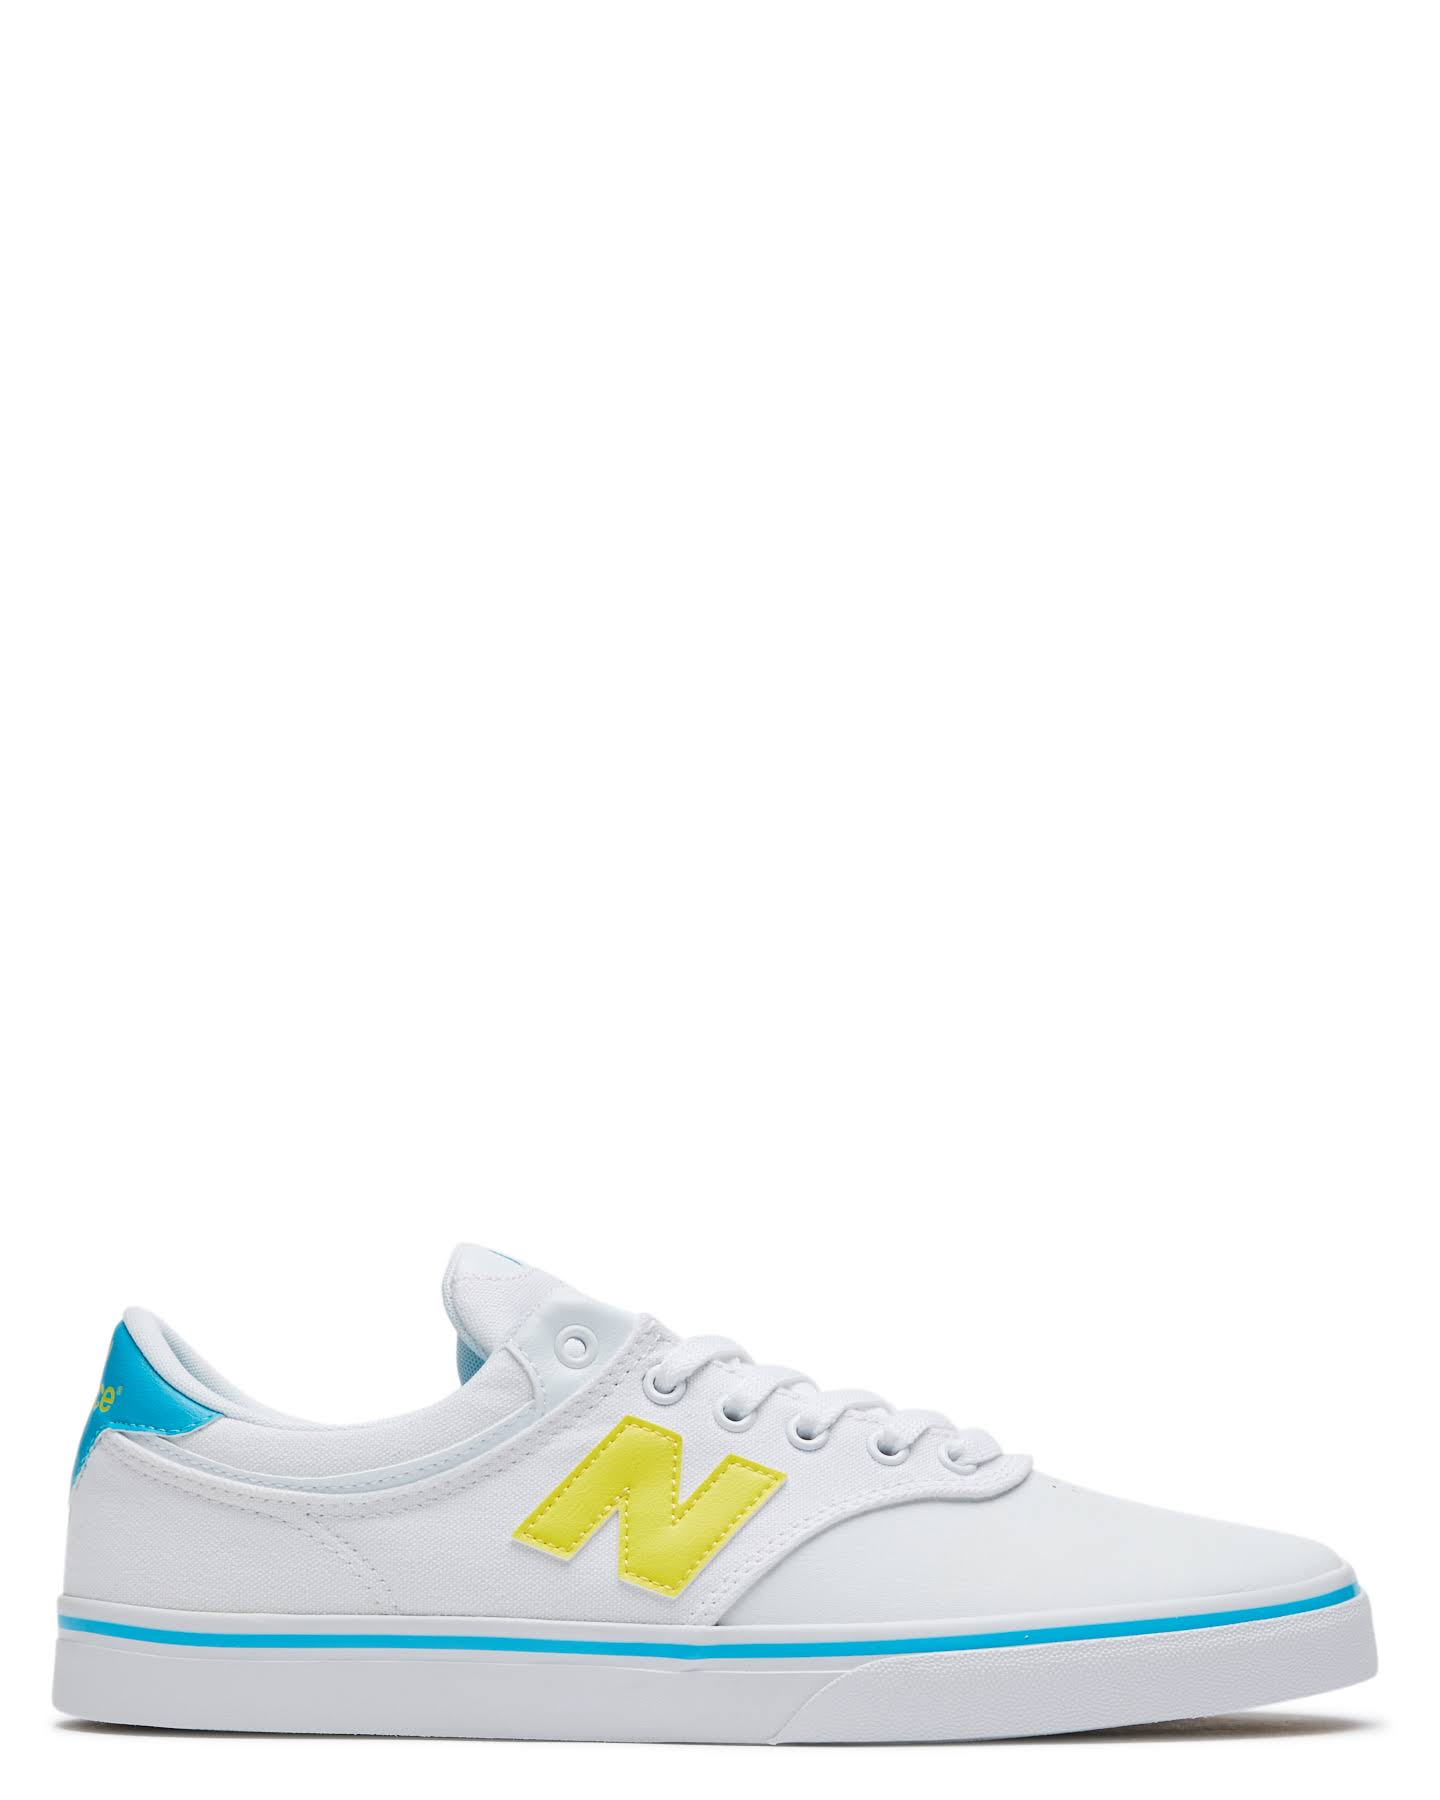 New Balance 255 Mens Shoe White Yellow Size 9